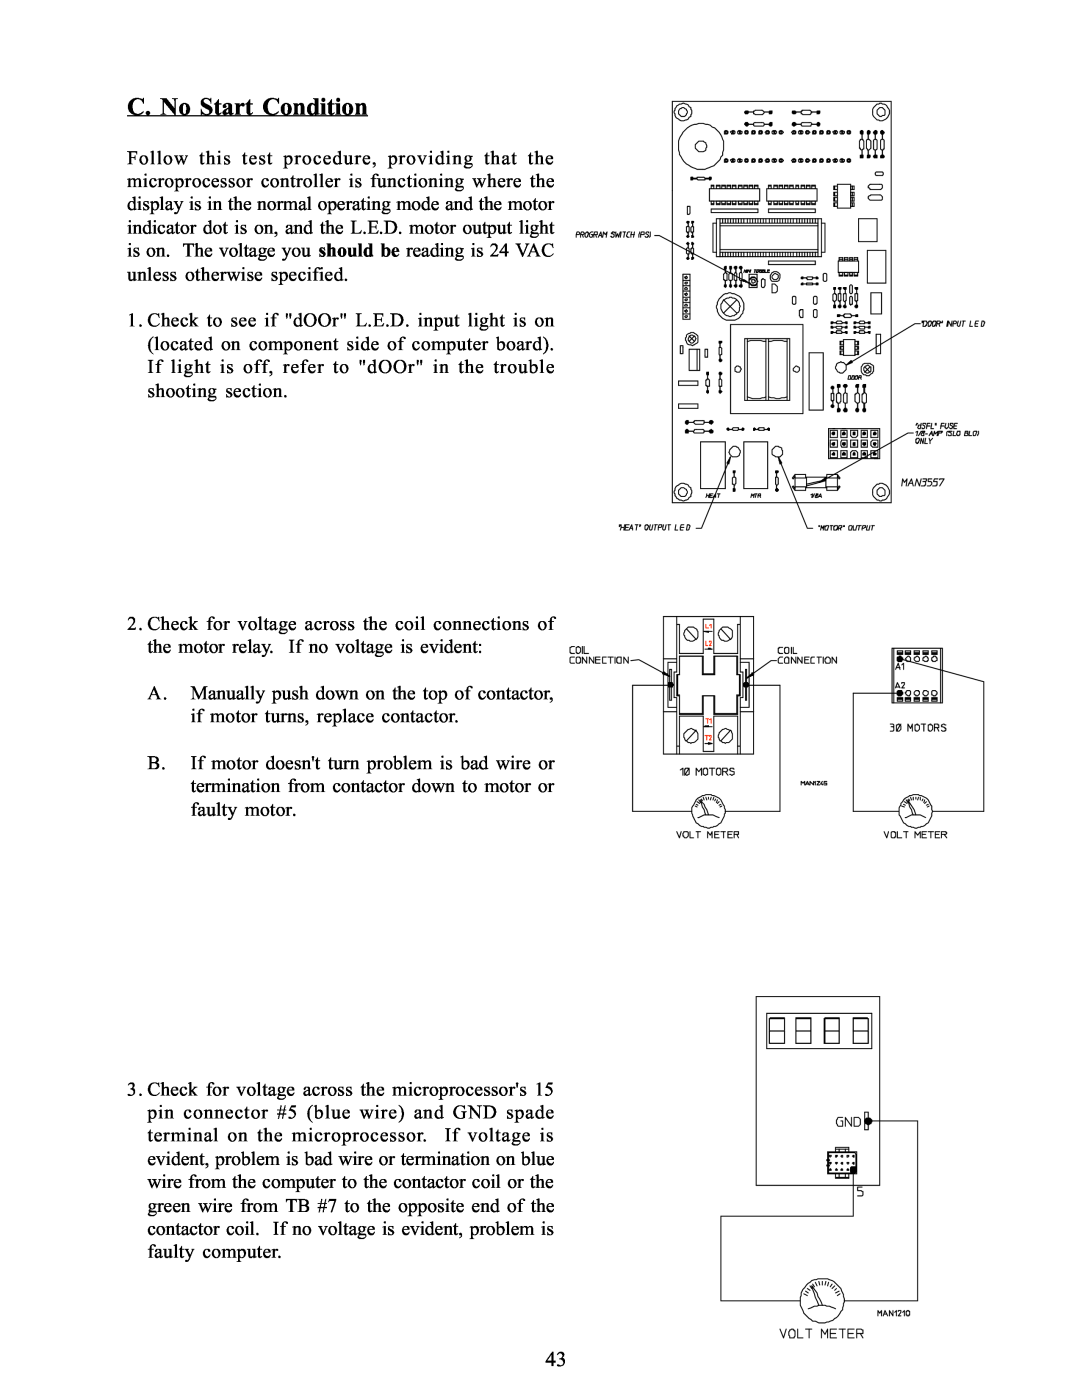 American Dryer Corp WDA-385 service manual C. No Start Condition 